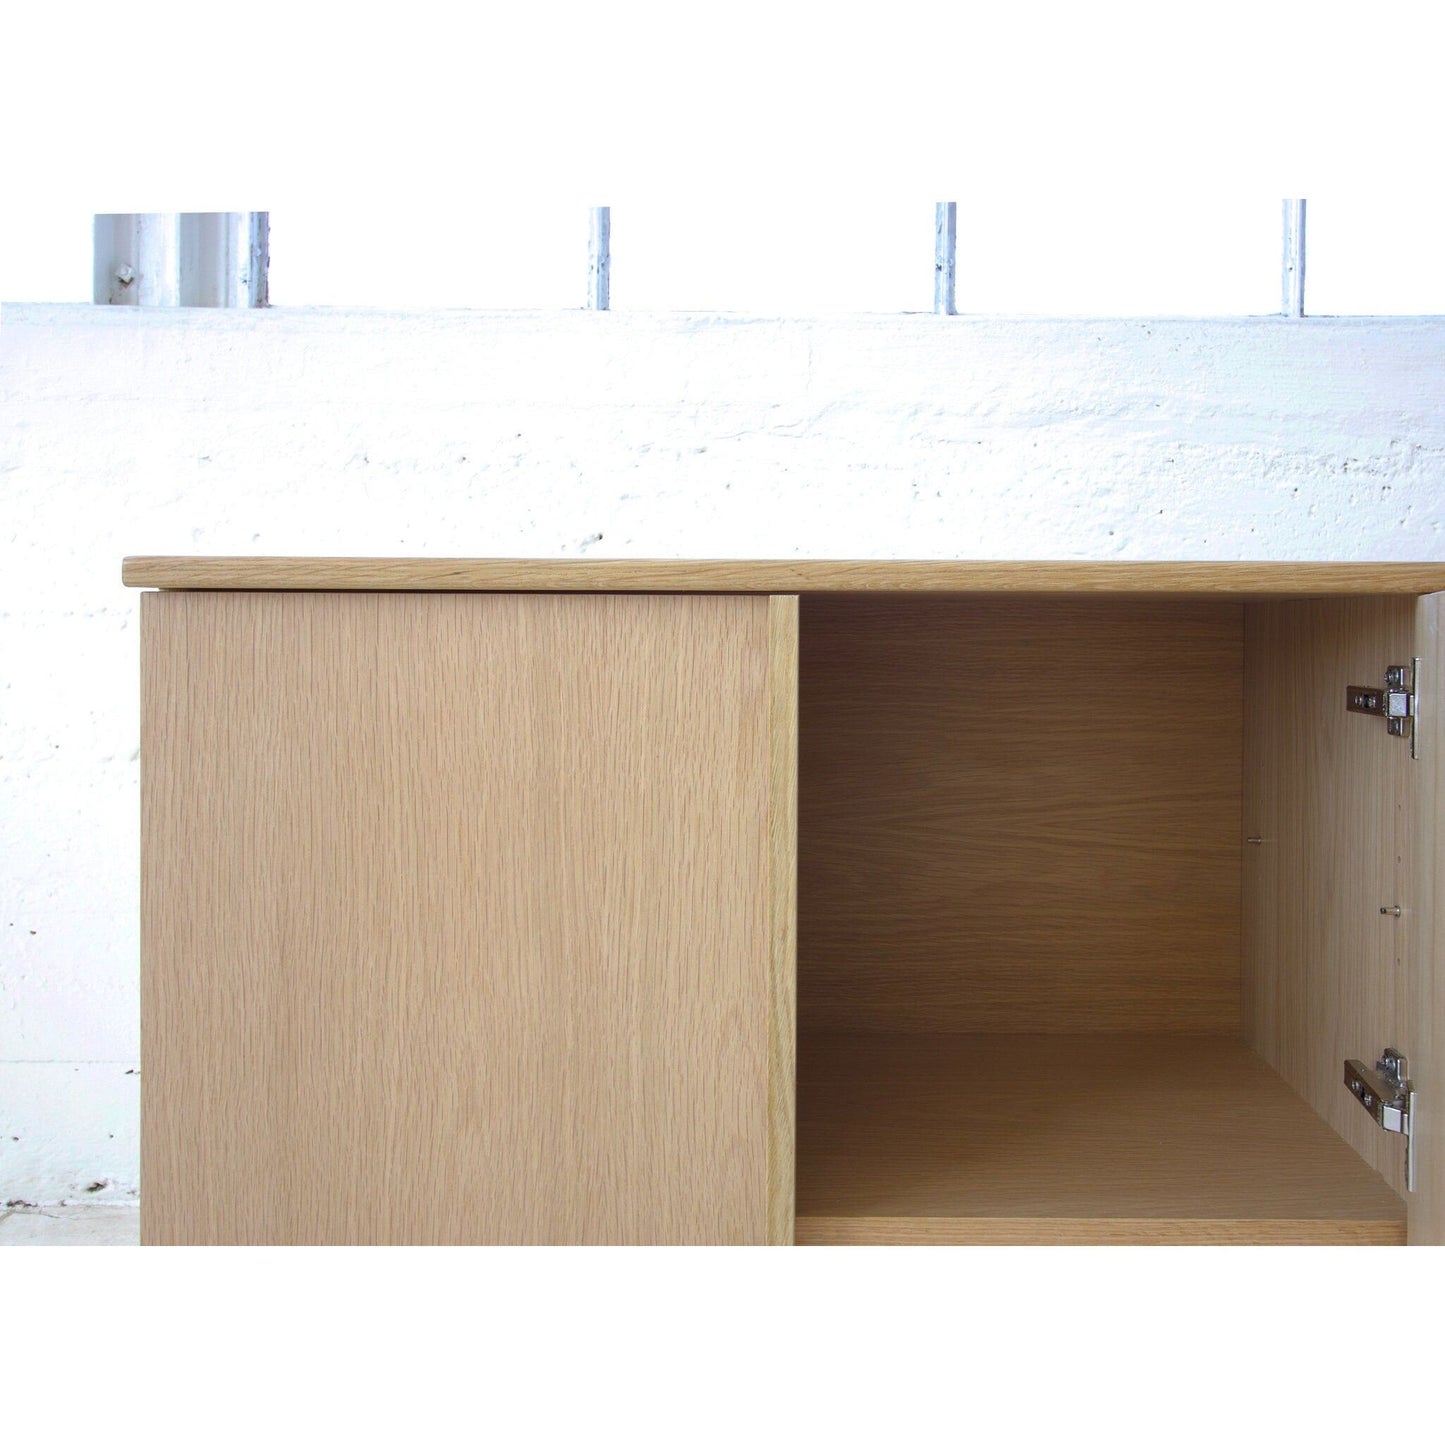 Vinyl Record Storage Cabinet | White oak Credenza | Record Cabinet | Minimalist sideboard